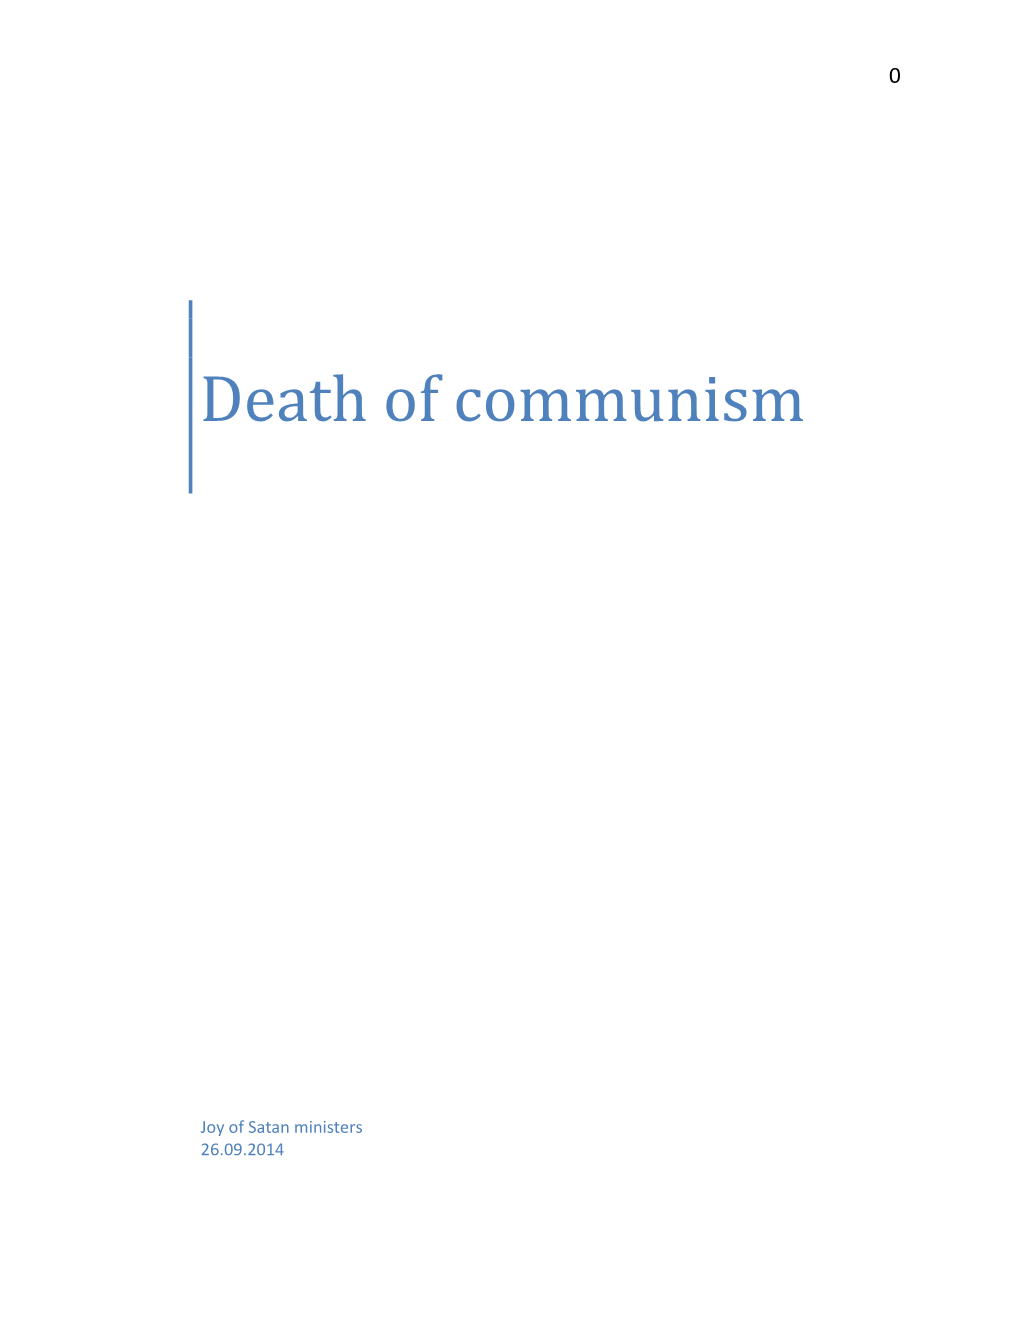 Death of Communism Part 1